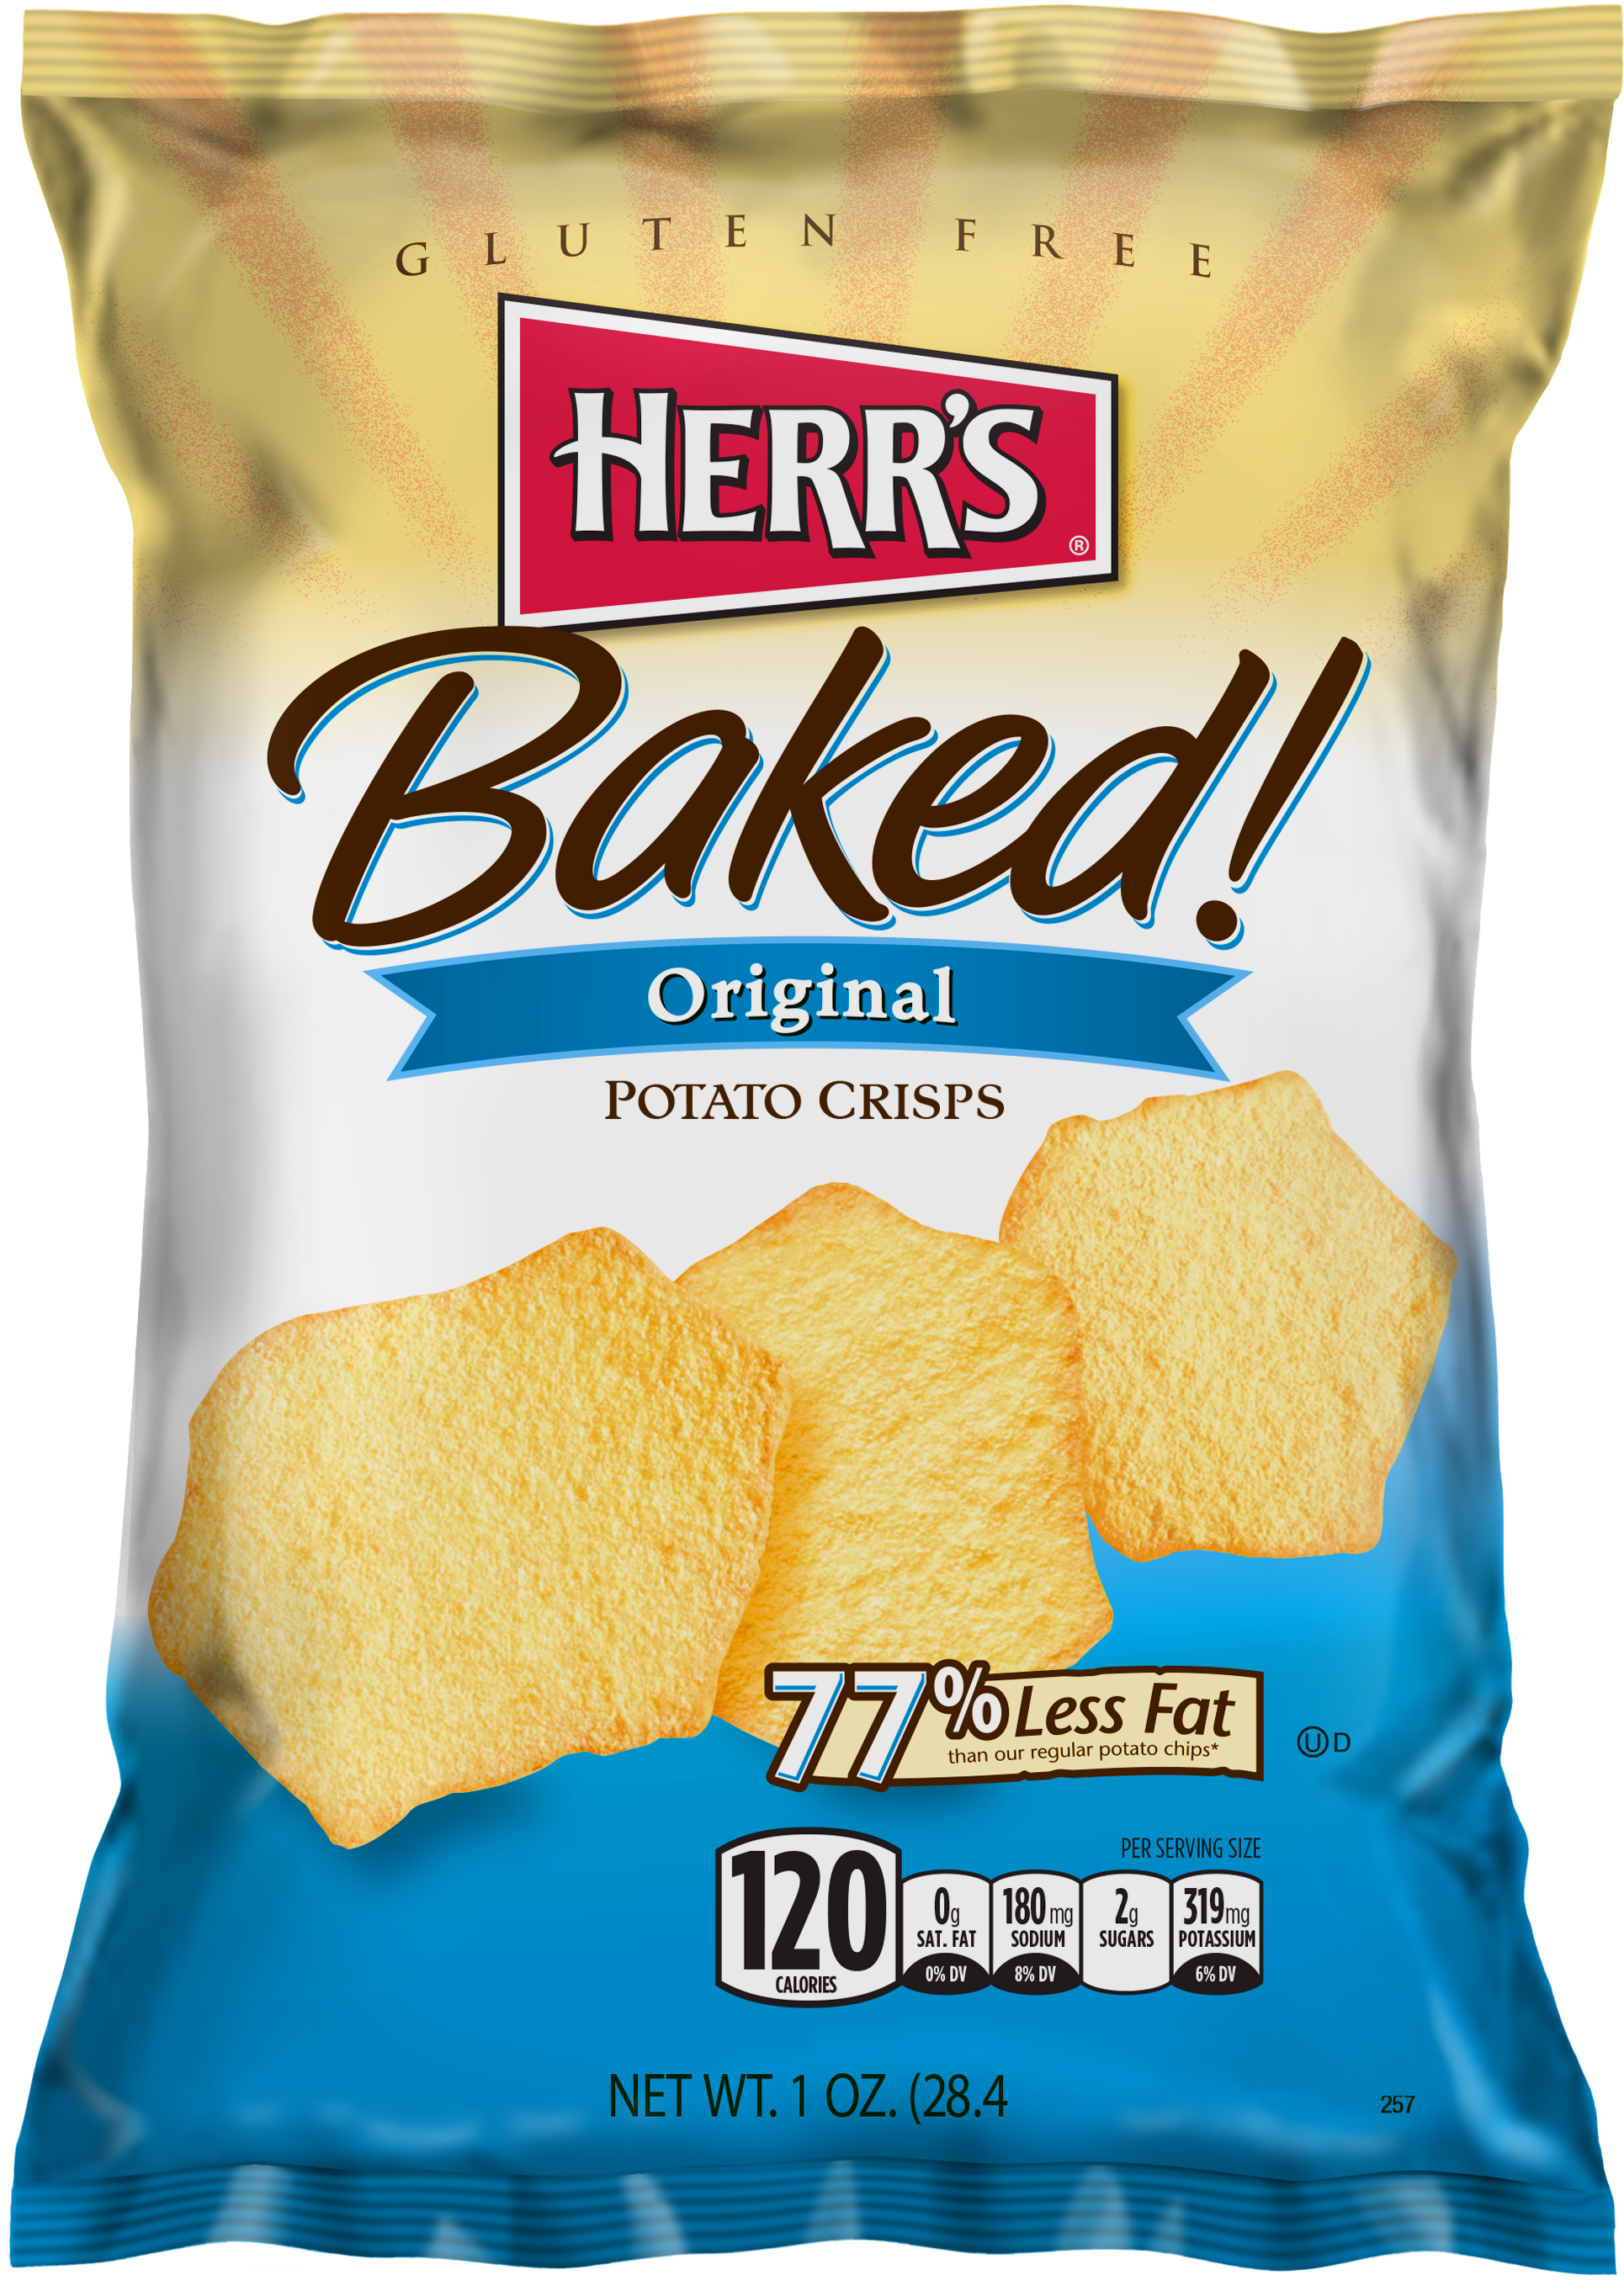 Herrs Baked Original Potato Crisps Gluten Free